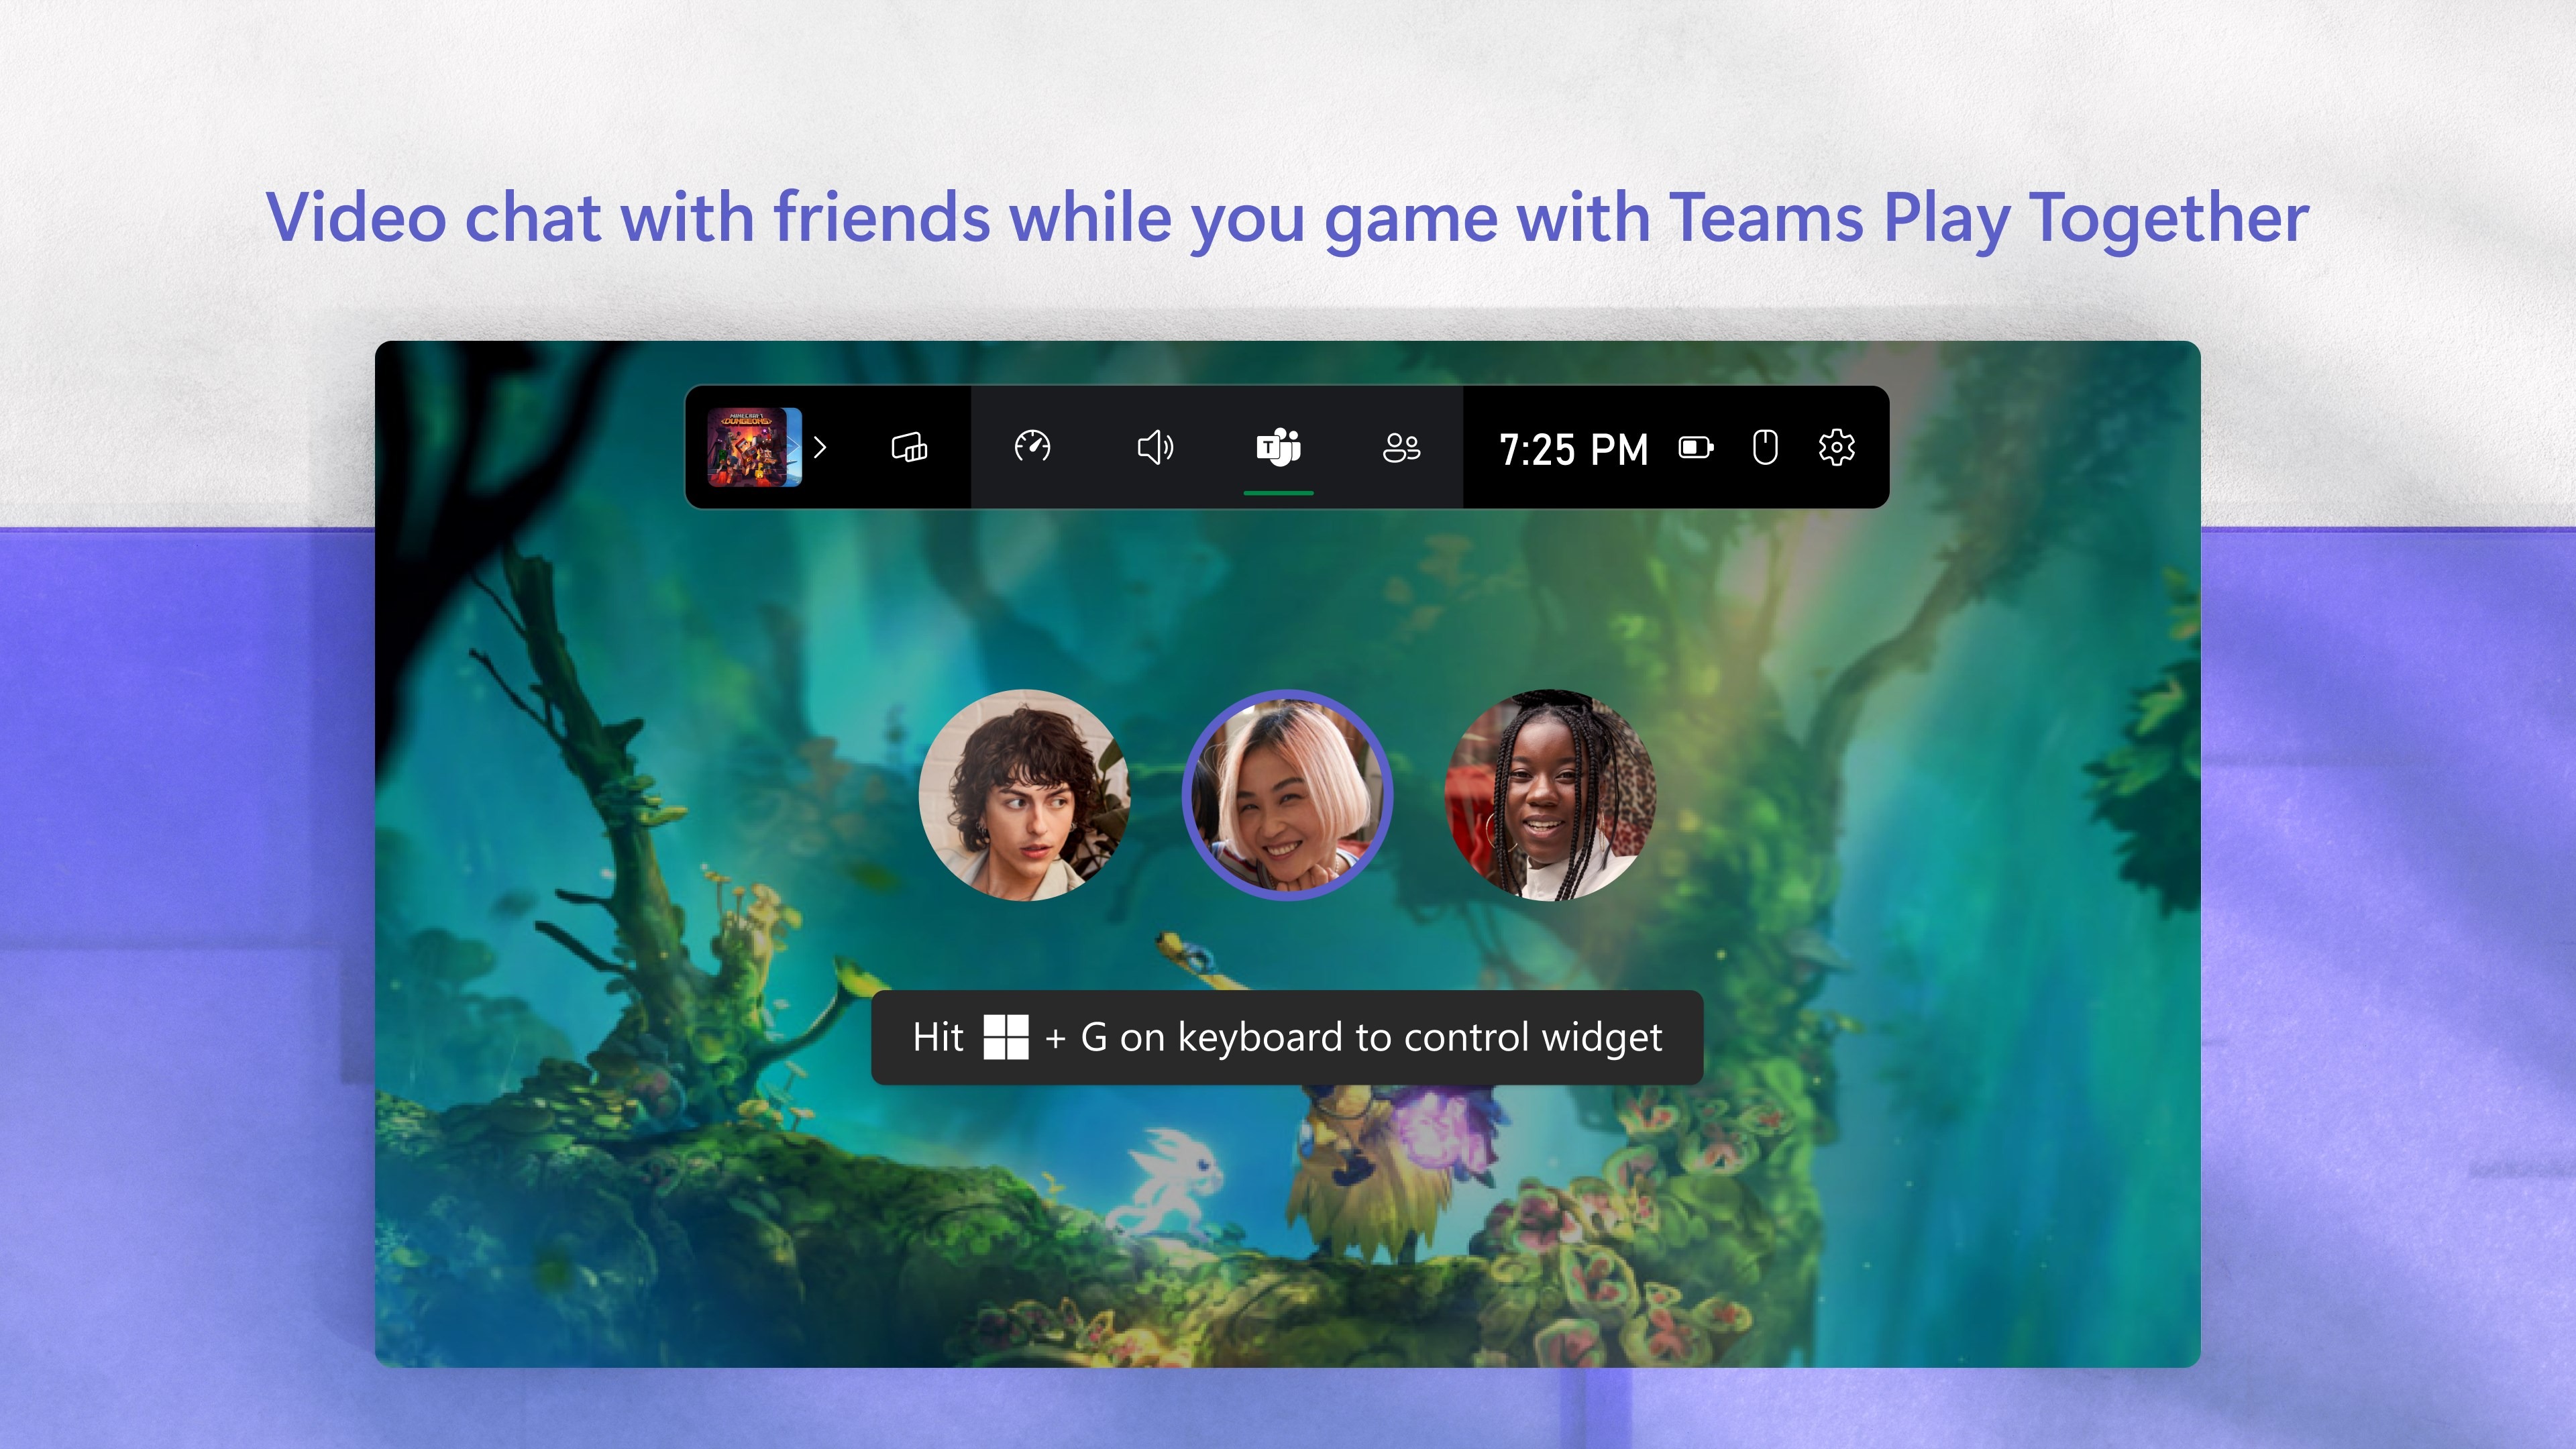 Microsoft Teams Play Together